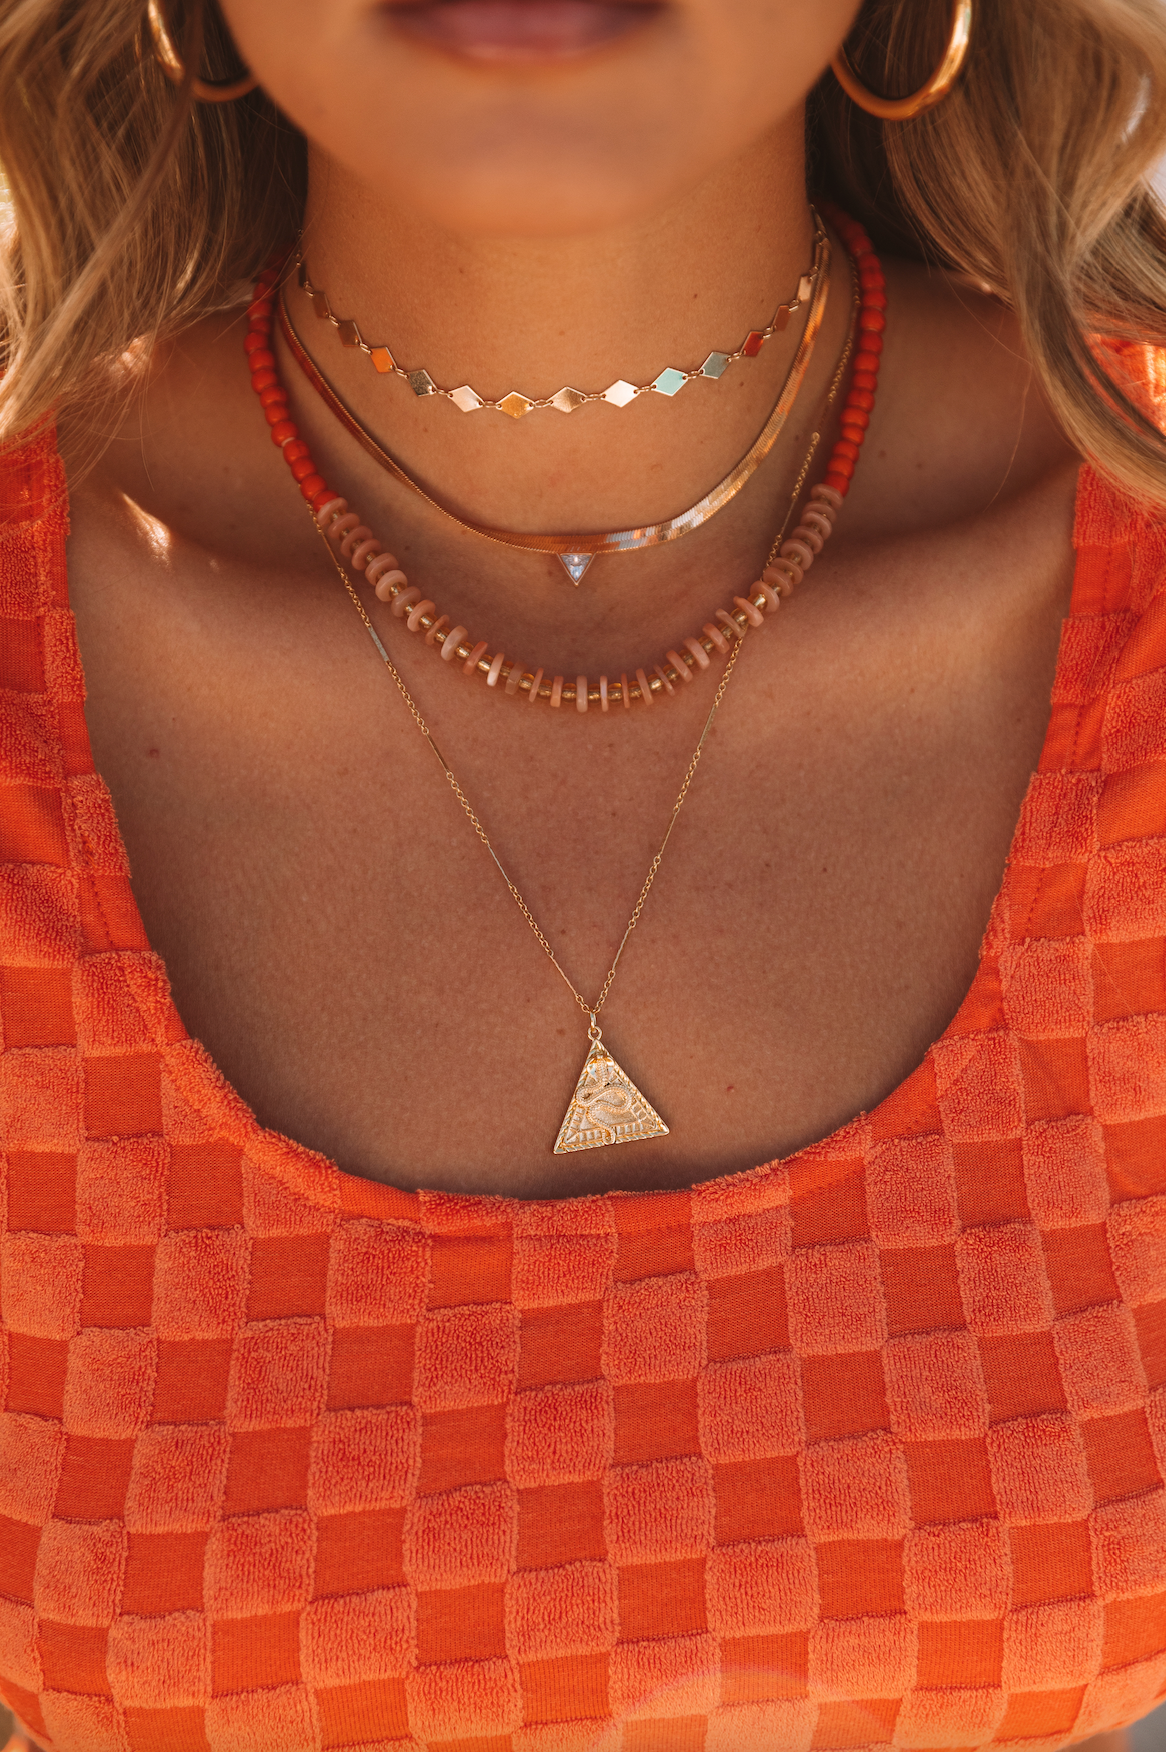 The Triangle Herringbone Necklace